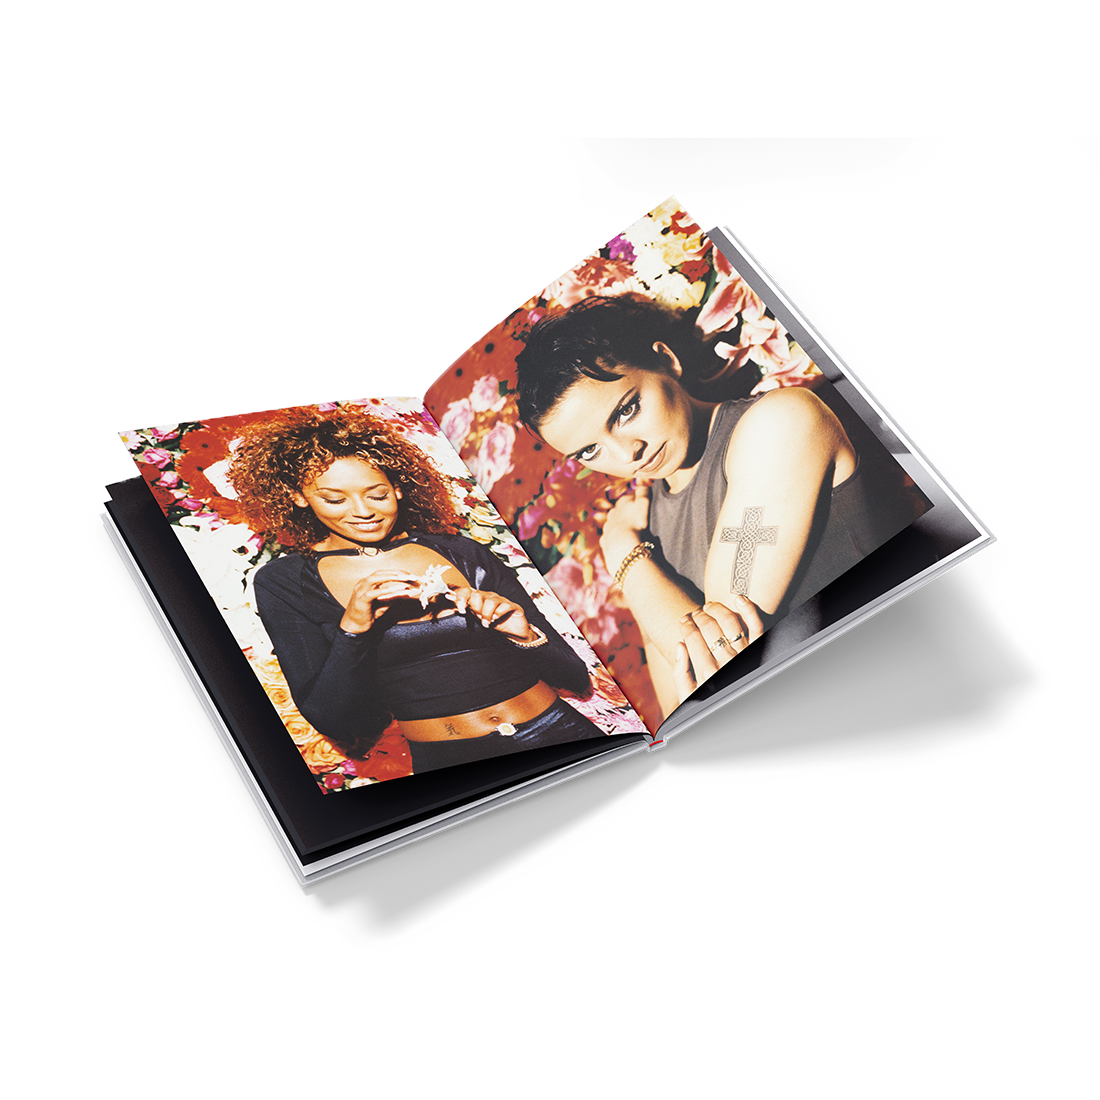 Spice Girls - Spiceworld 25: 2CD + Hardback Book